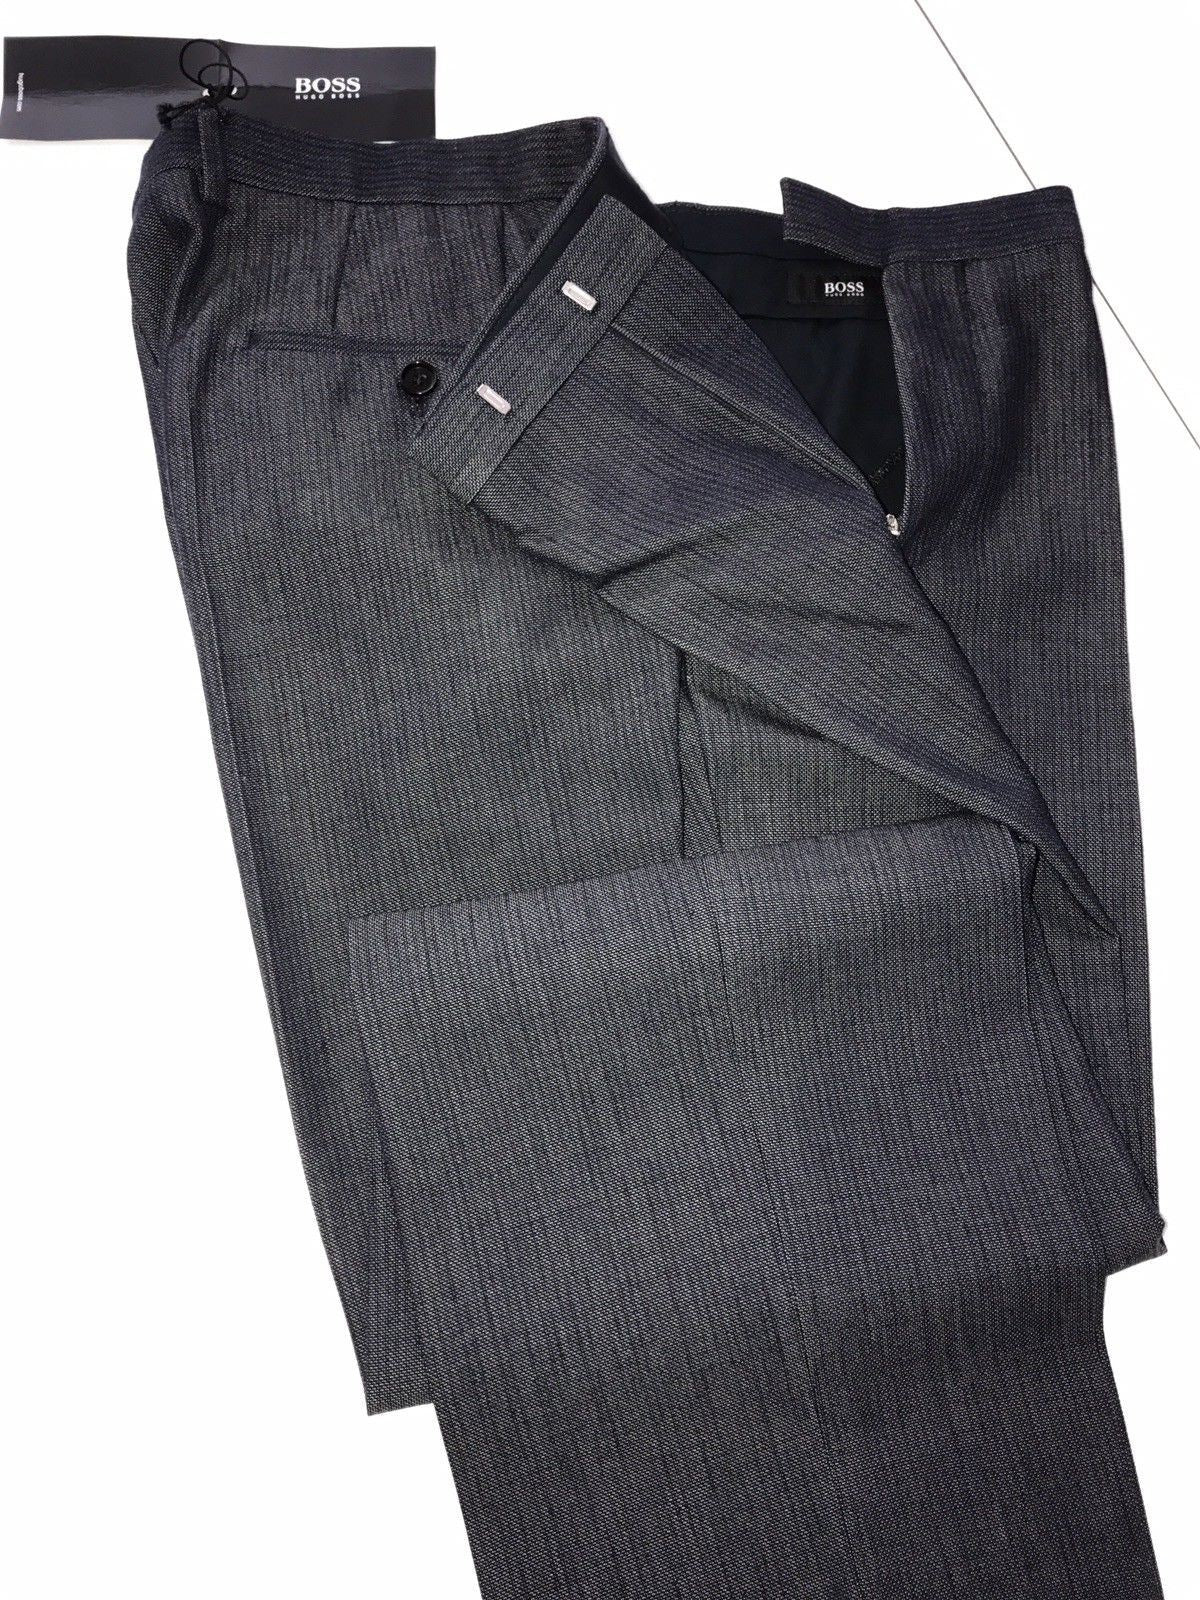 NWT $255 Boss Hugo Boss Central Mens Cotton Navy Dress Pants Size 30R US